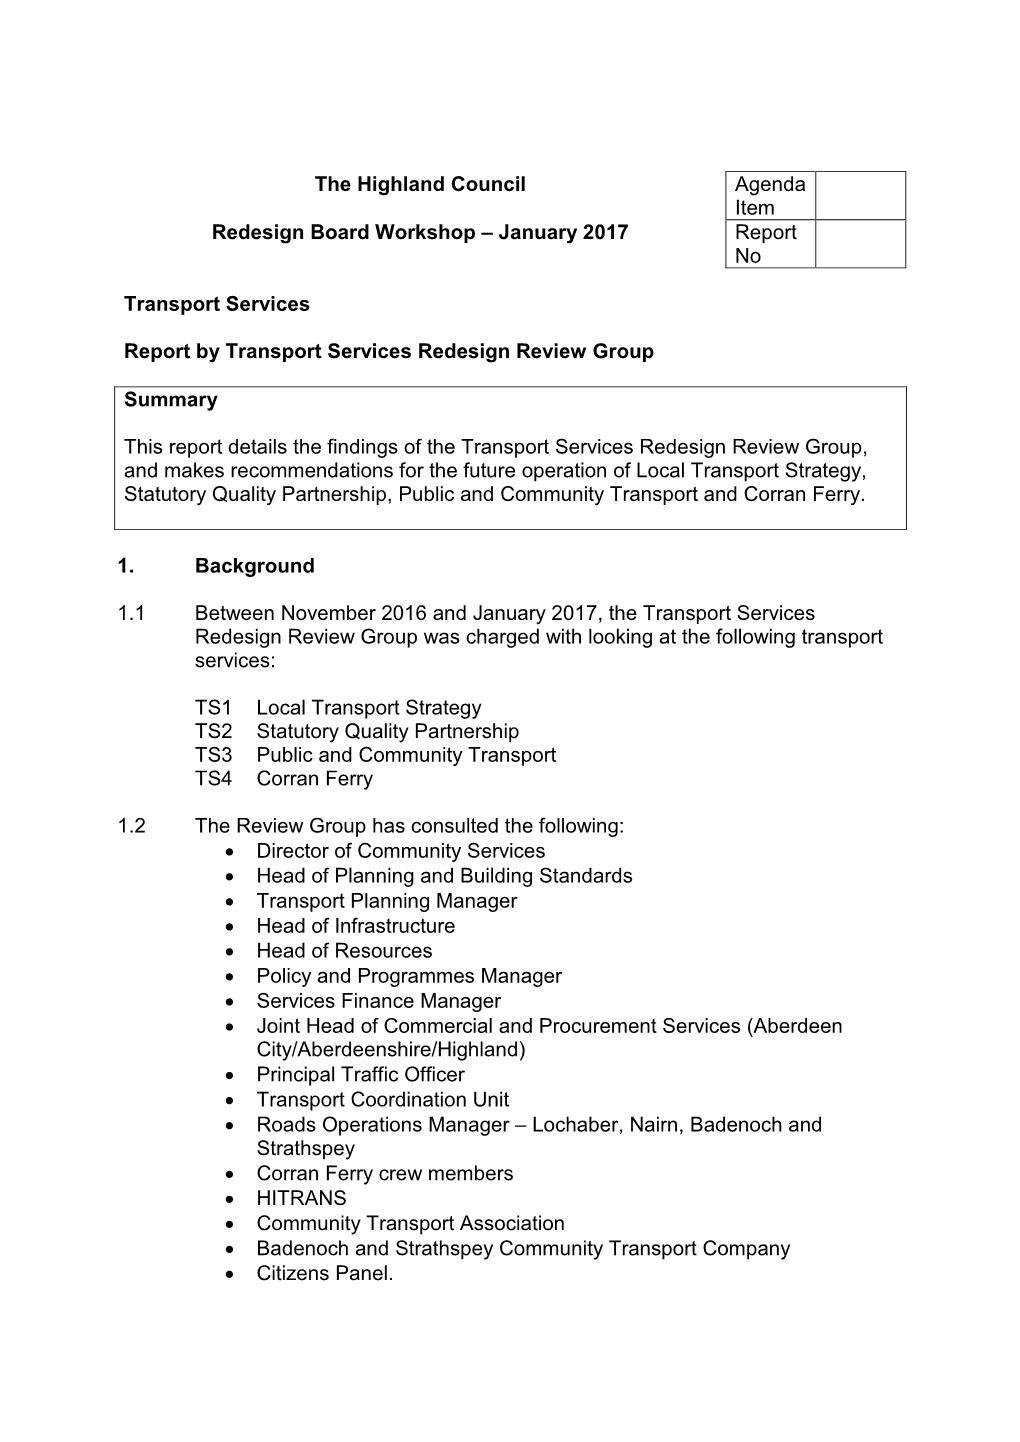 The Highland Council Agenda Item Redesign Board Workshop